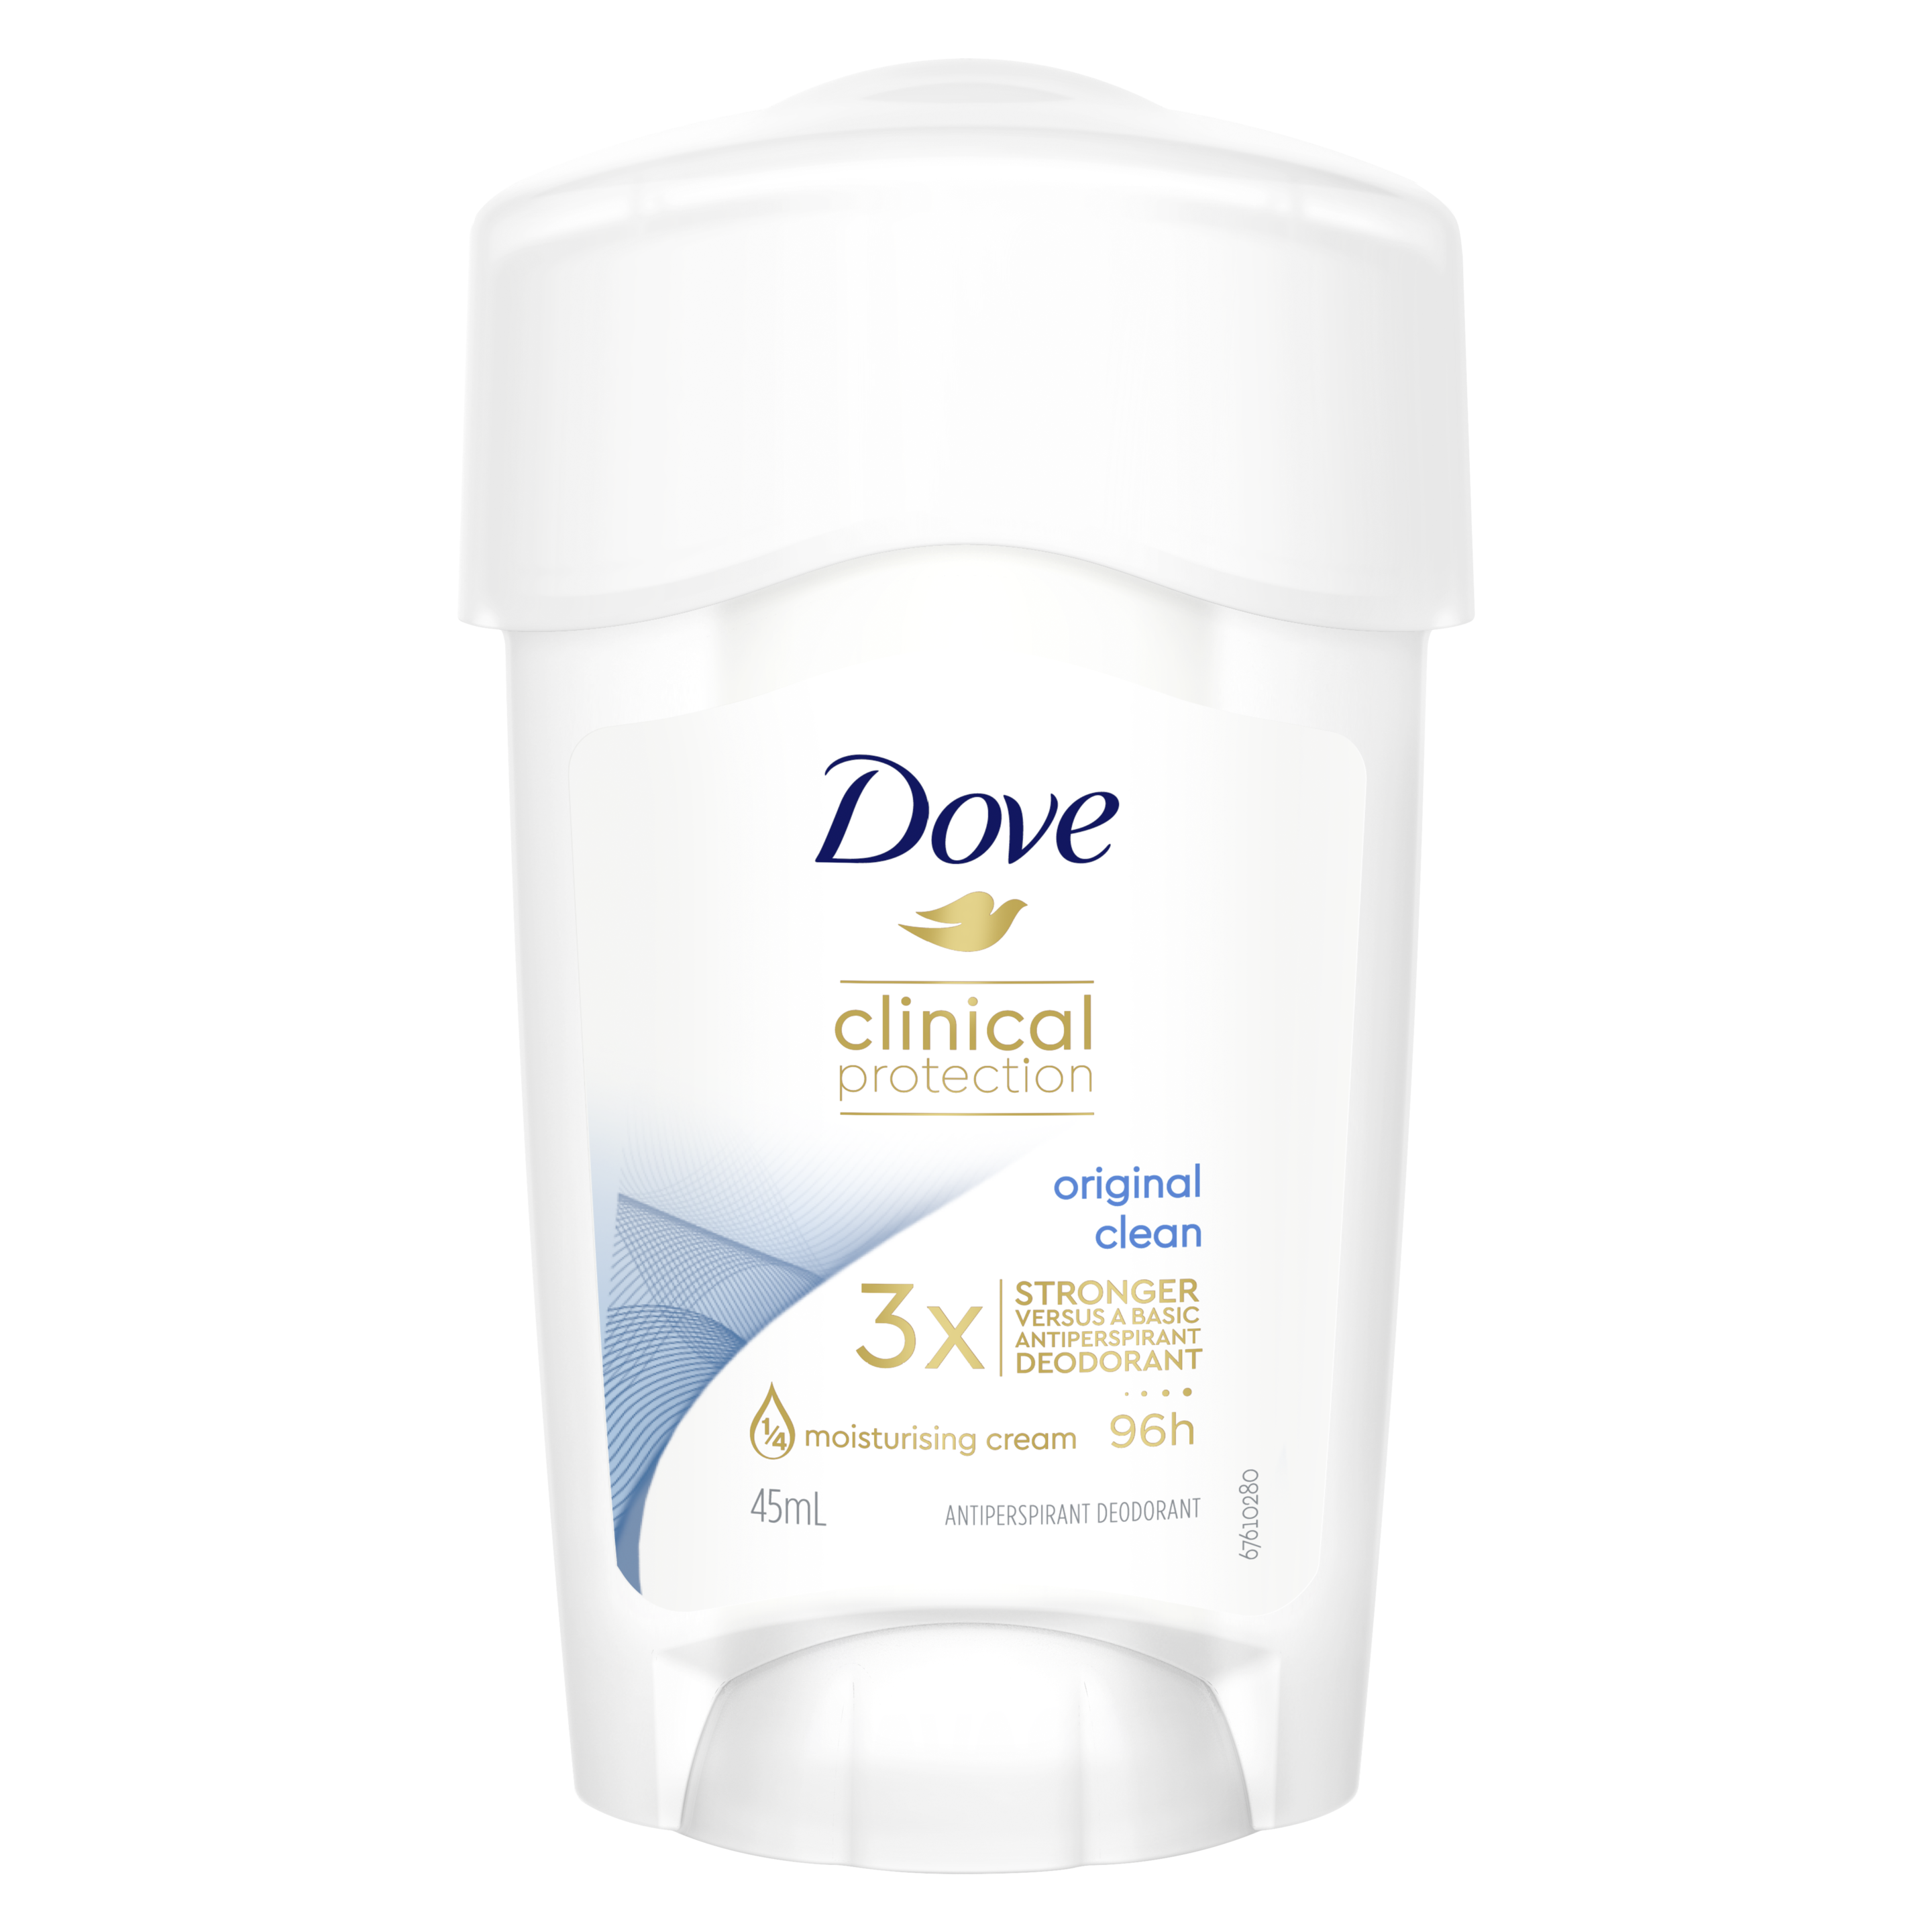 Dove Clinical Protection Original Deodorant 45ml Text